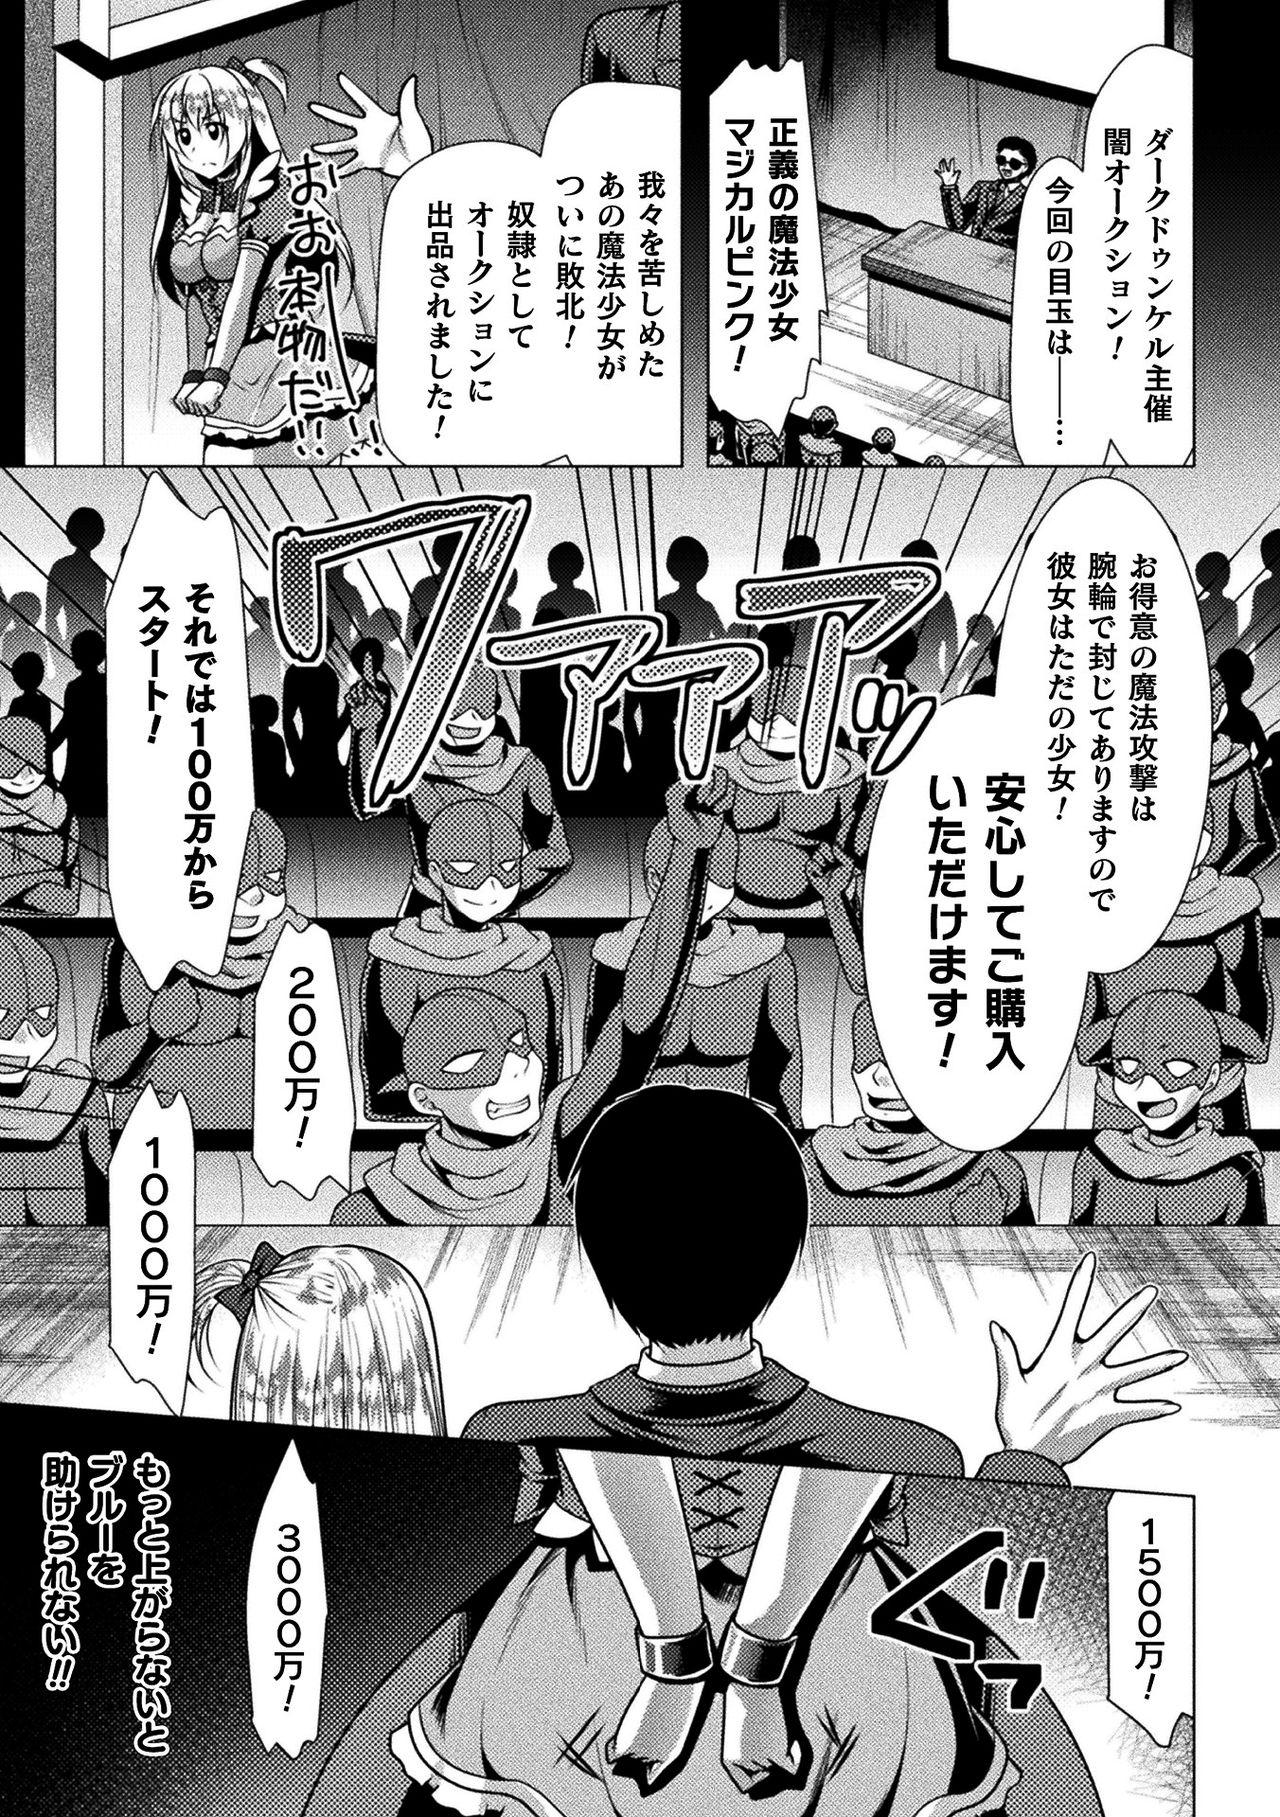 2D Comic Magazine Mahou Shoujo Seidorei Auction e Youkoso! Vol. 2 52